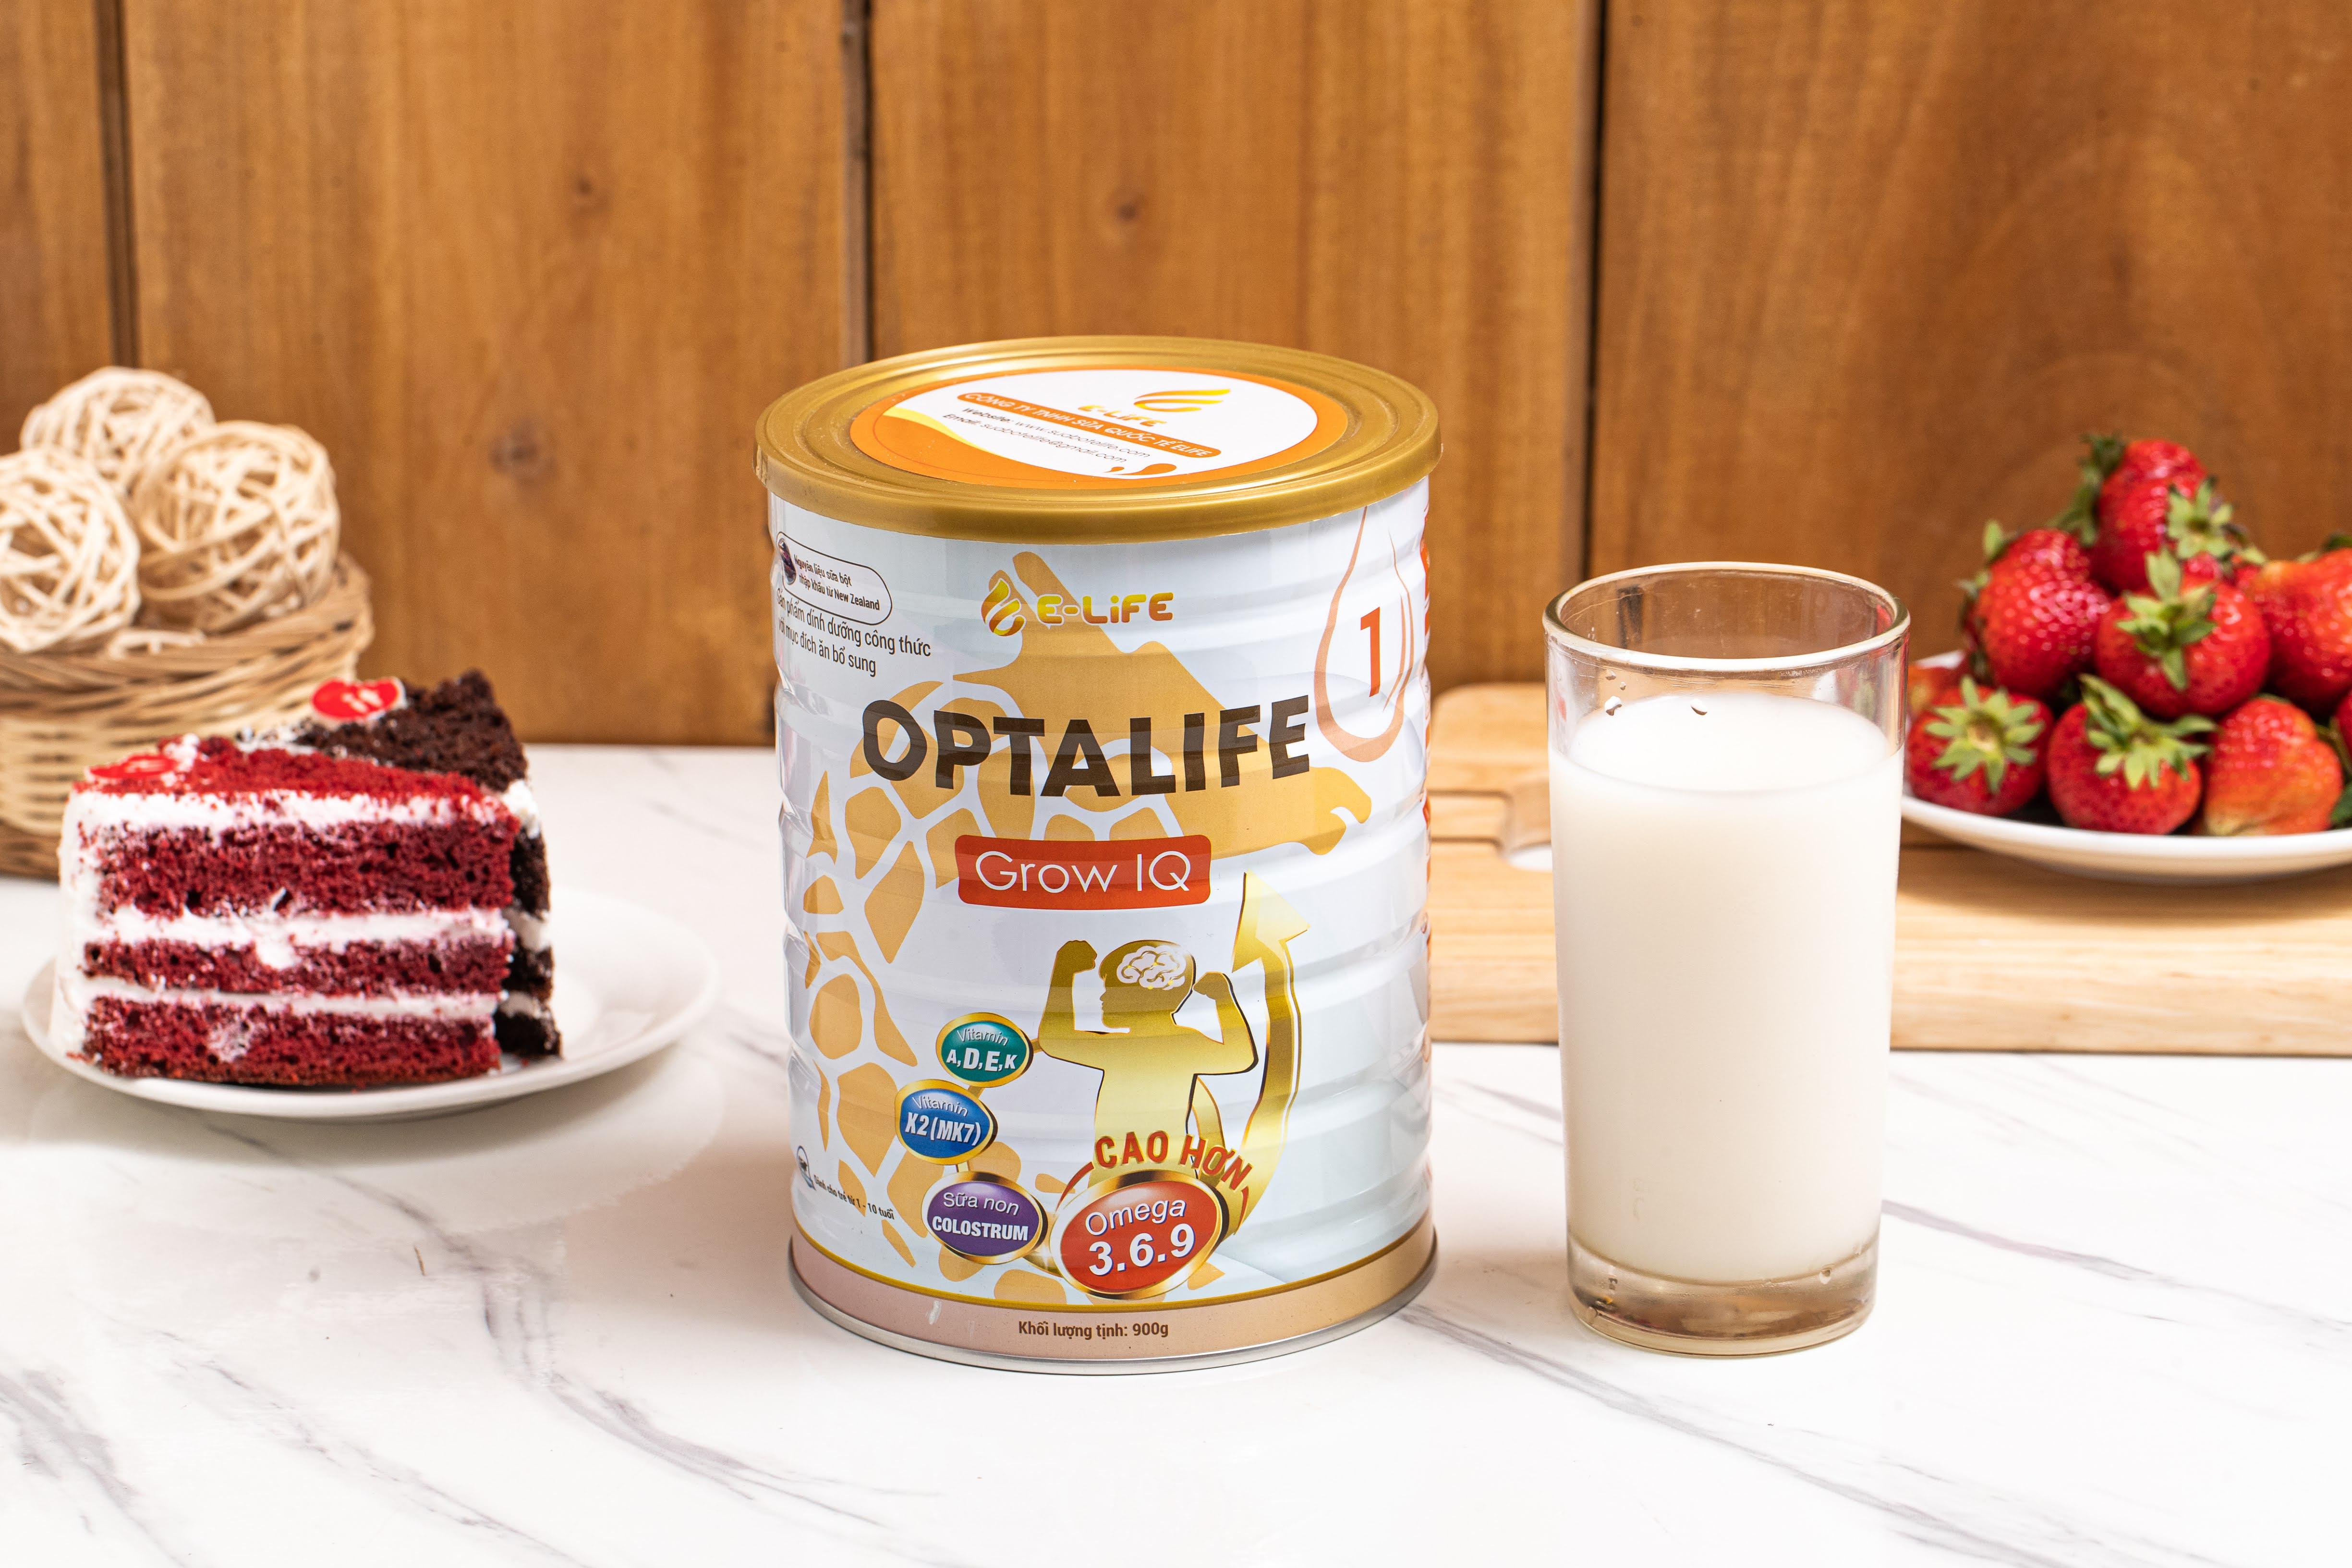 Sữa non Optalife1 - Sữa bột giống sữa mẹ nhất